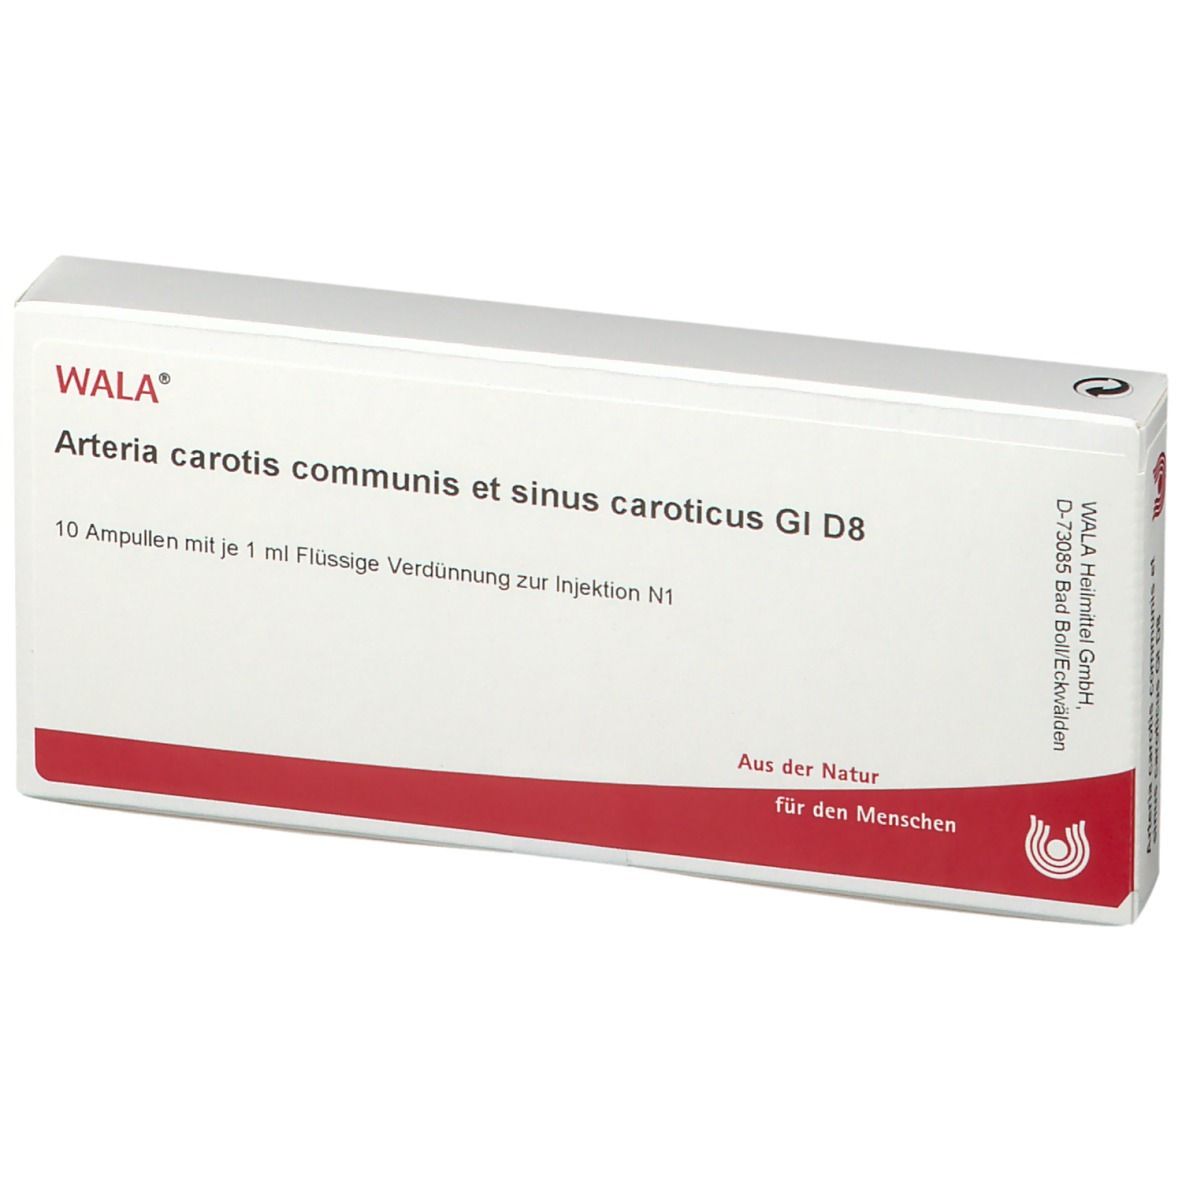 WALA® Arteria carotis communis et sinus caroticus Gl D 8